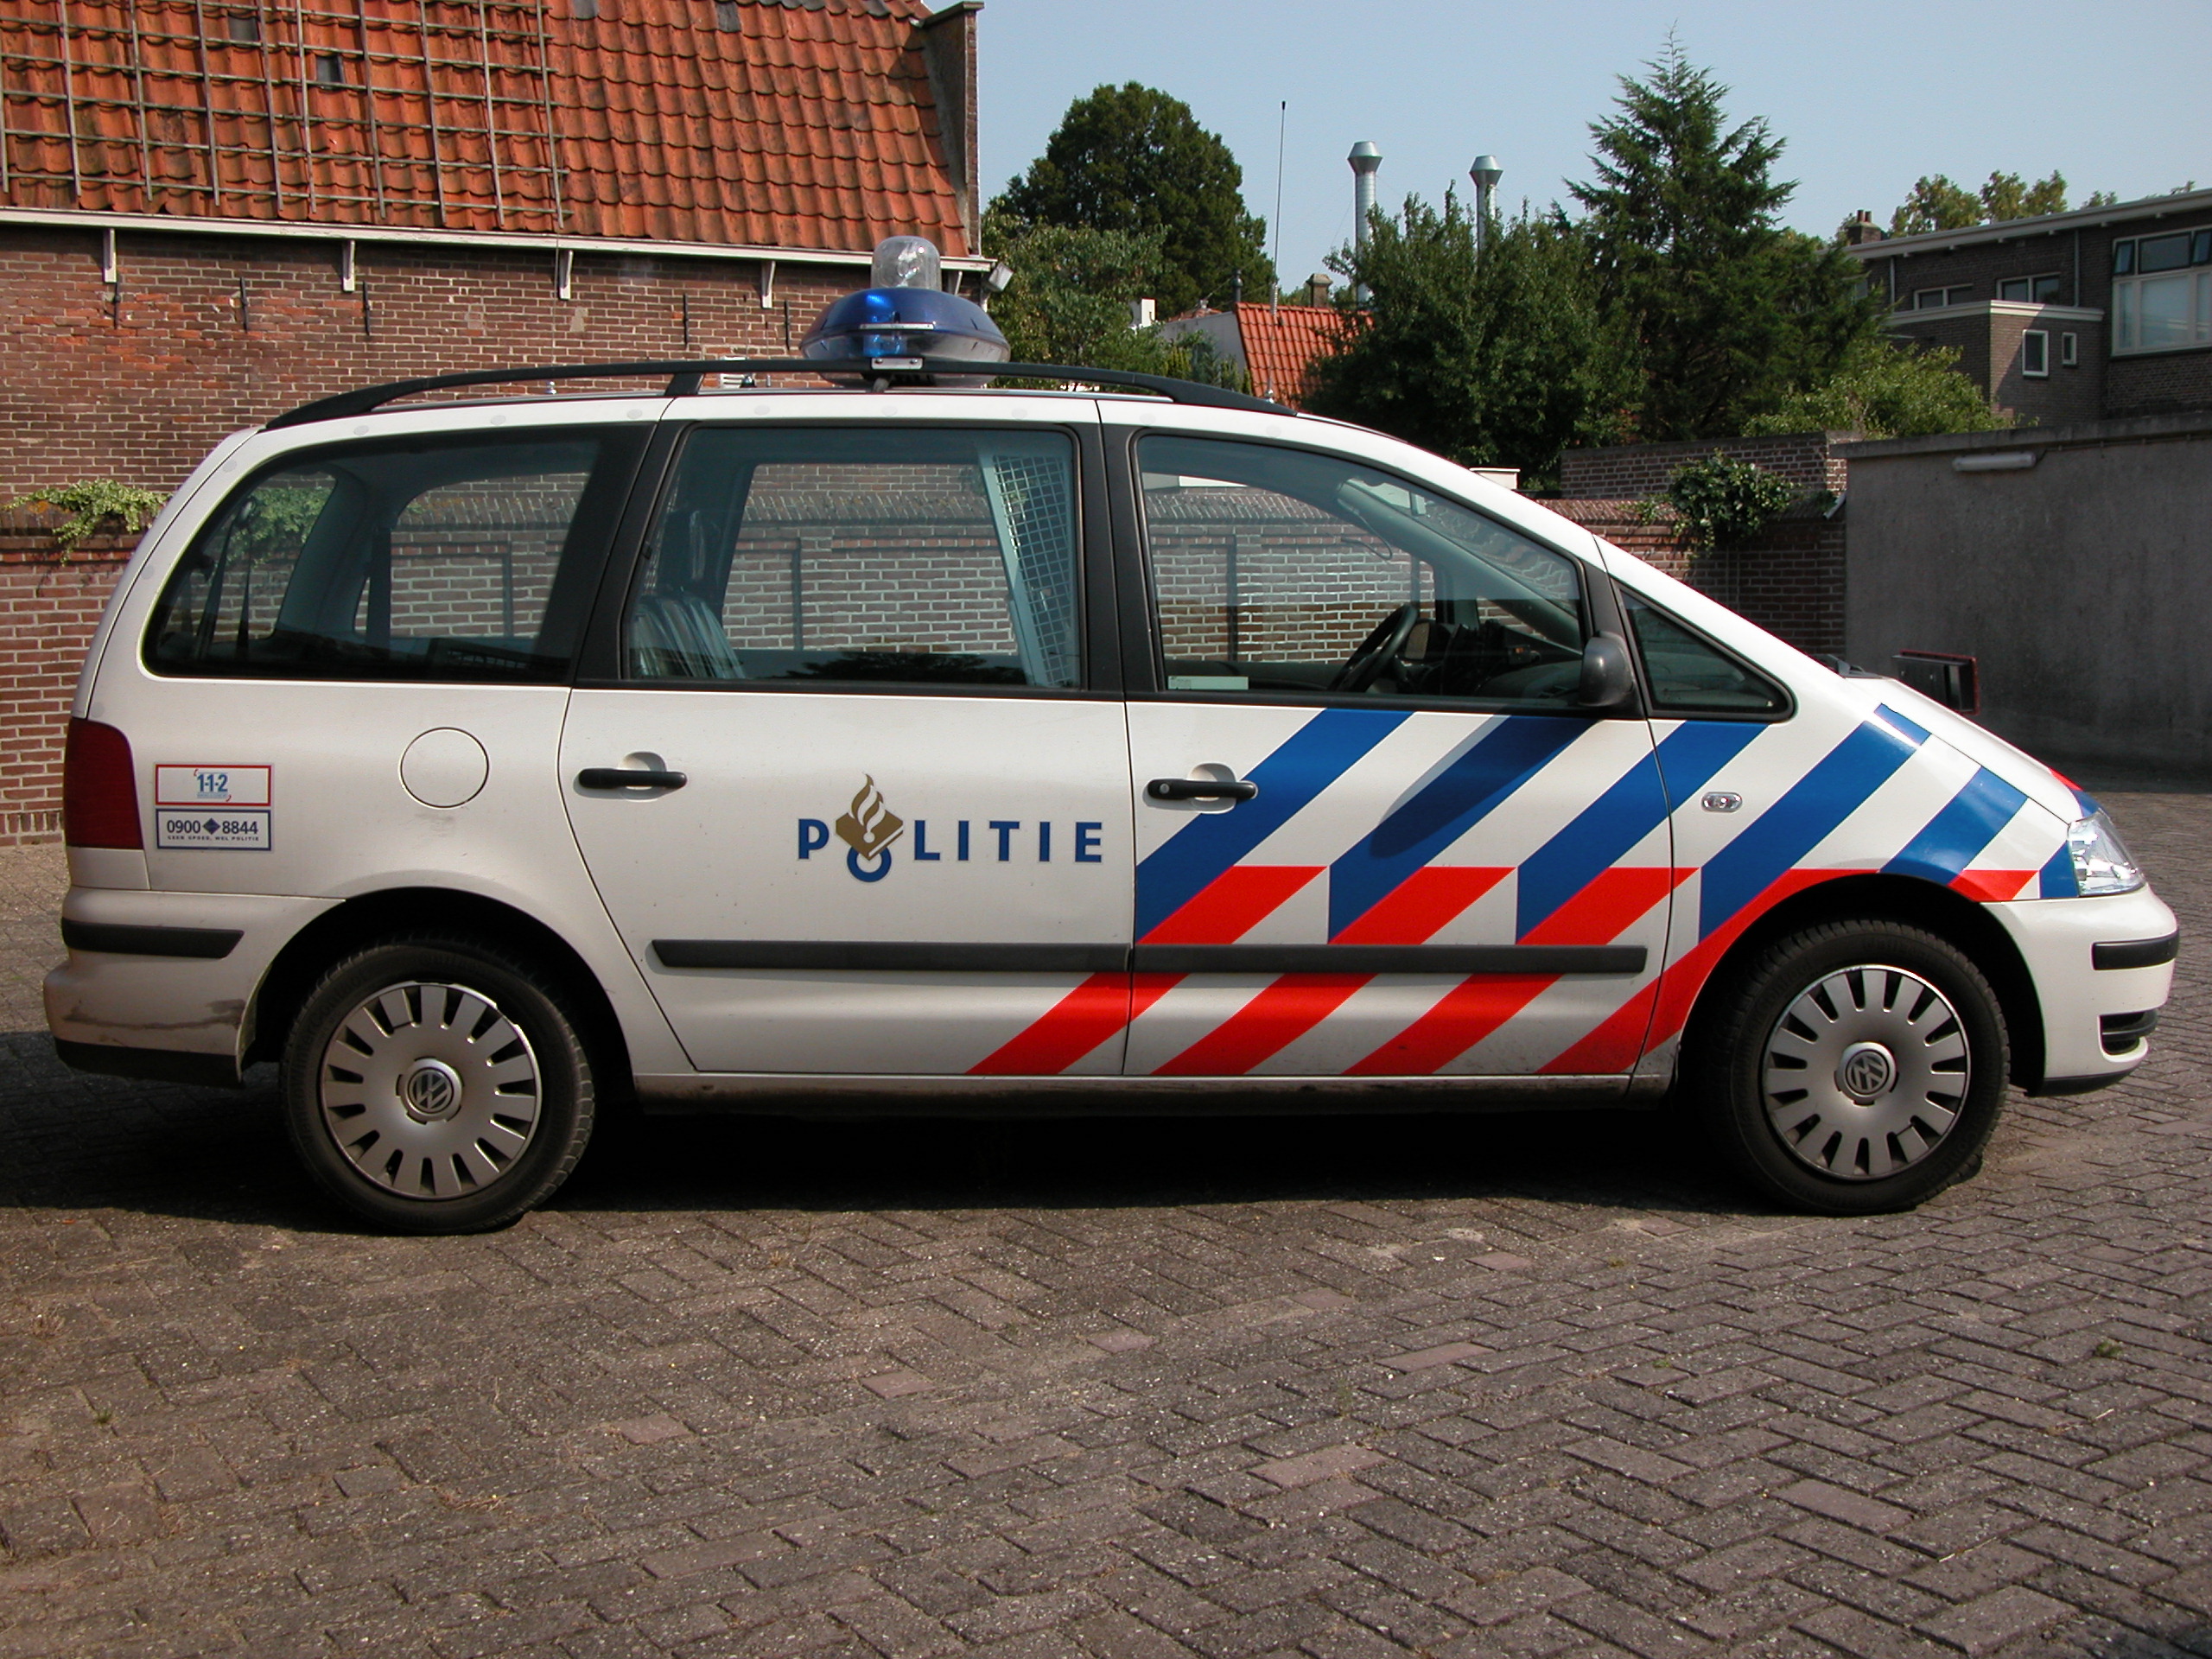 dutch plice car van blue and red stripes politie siren